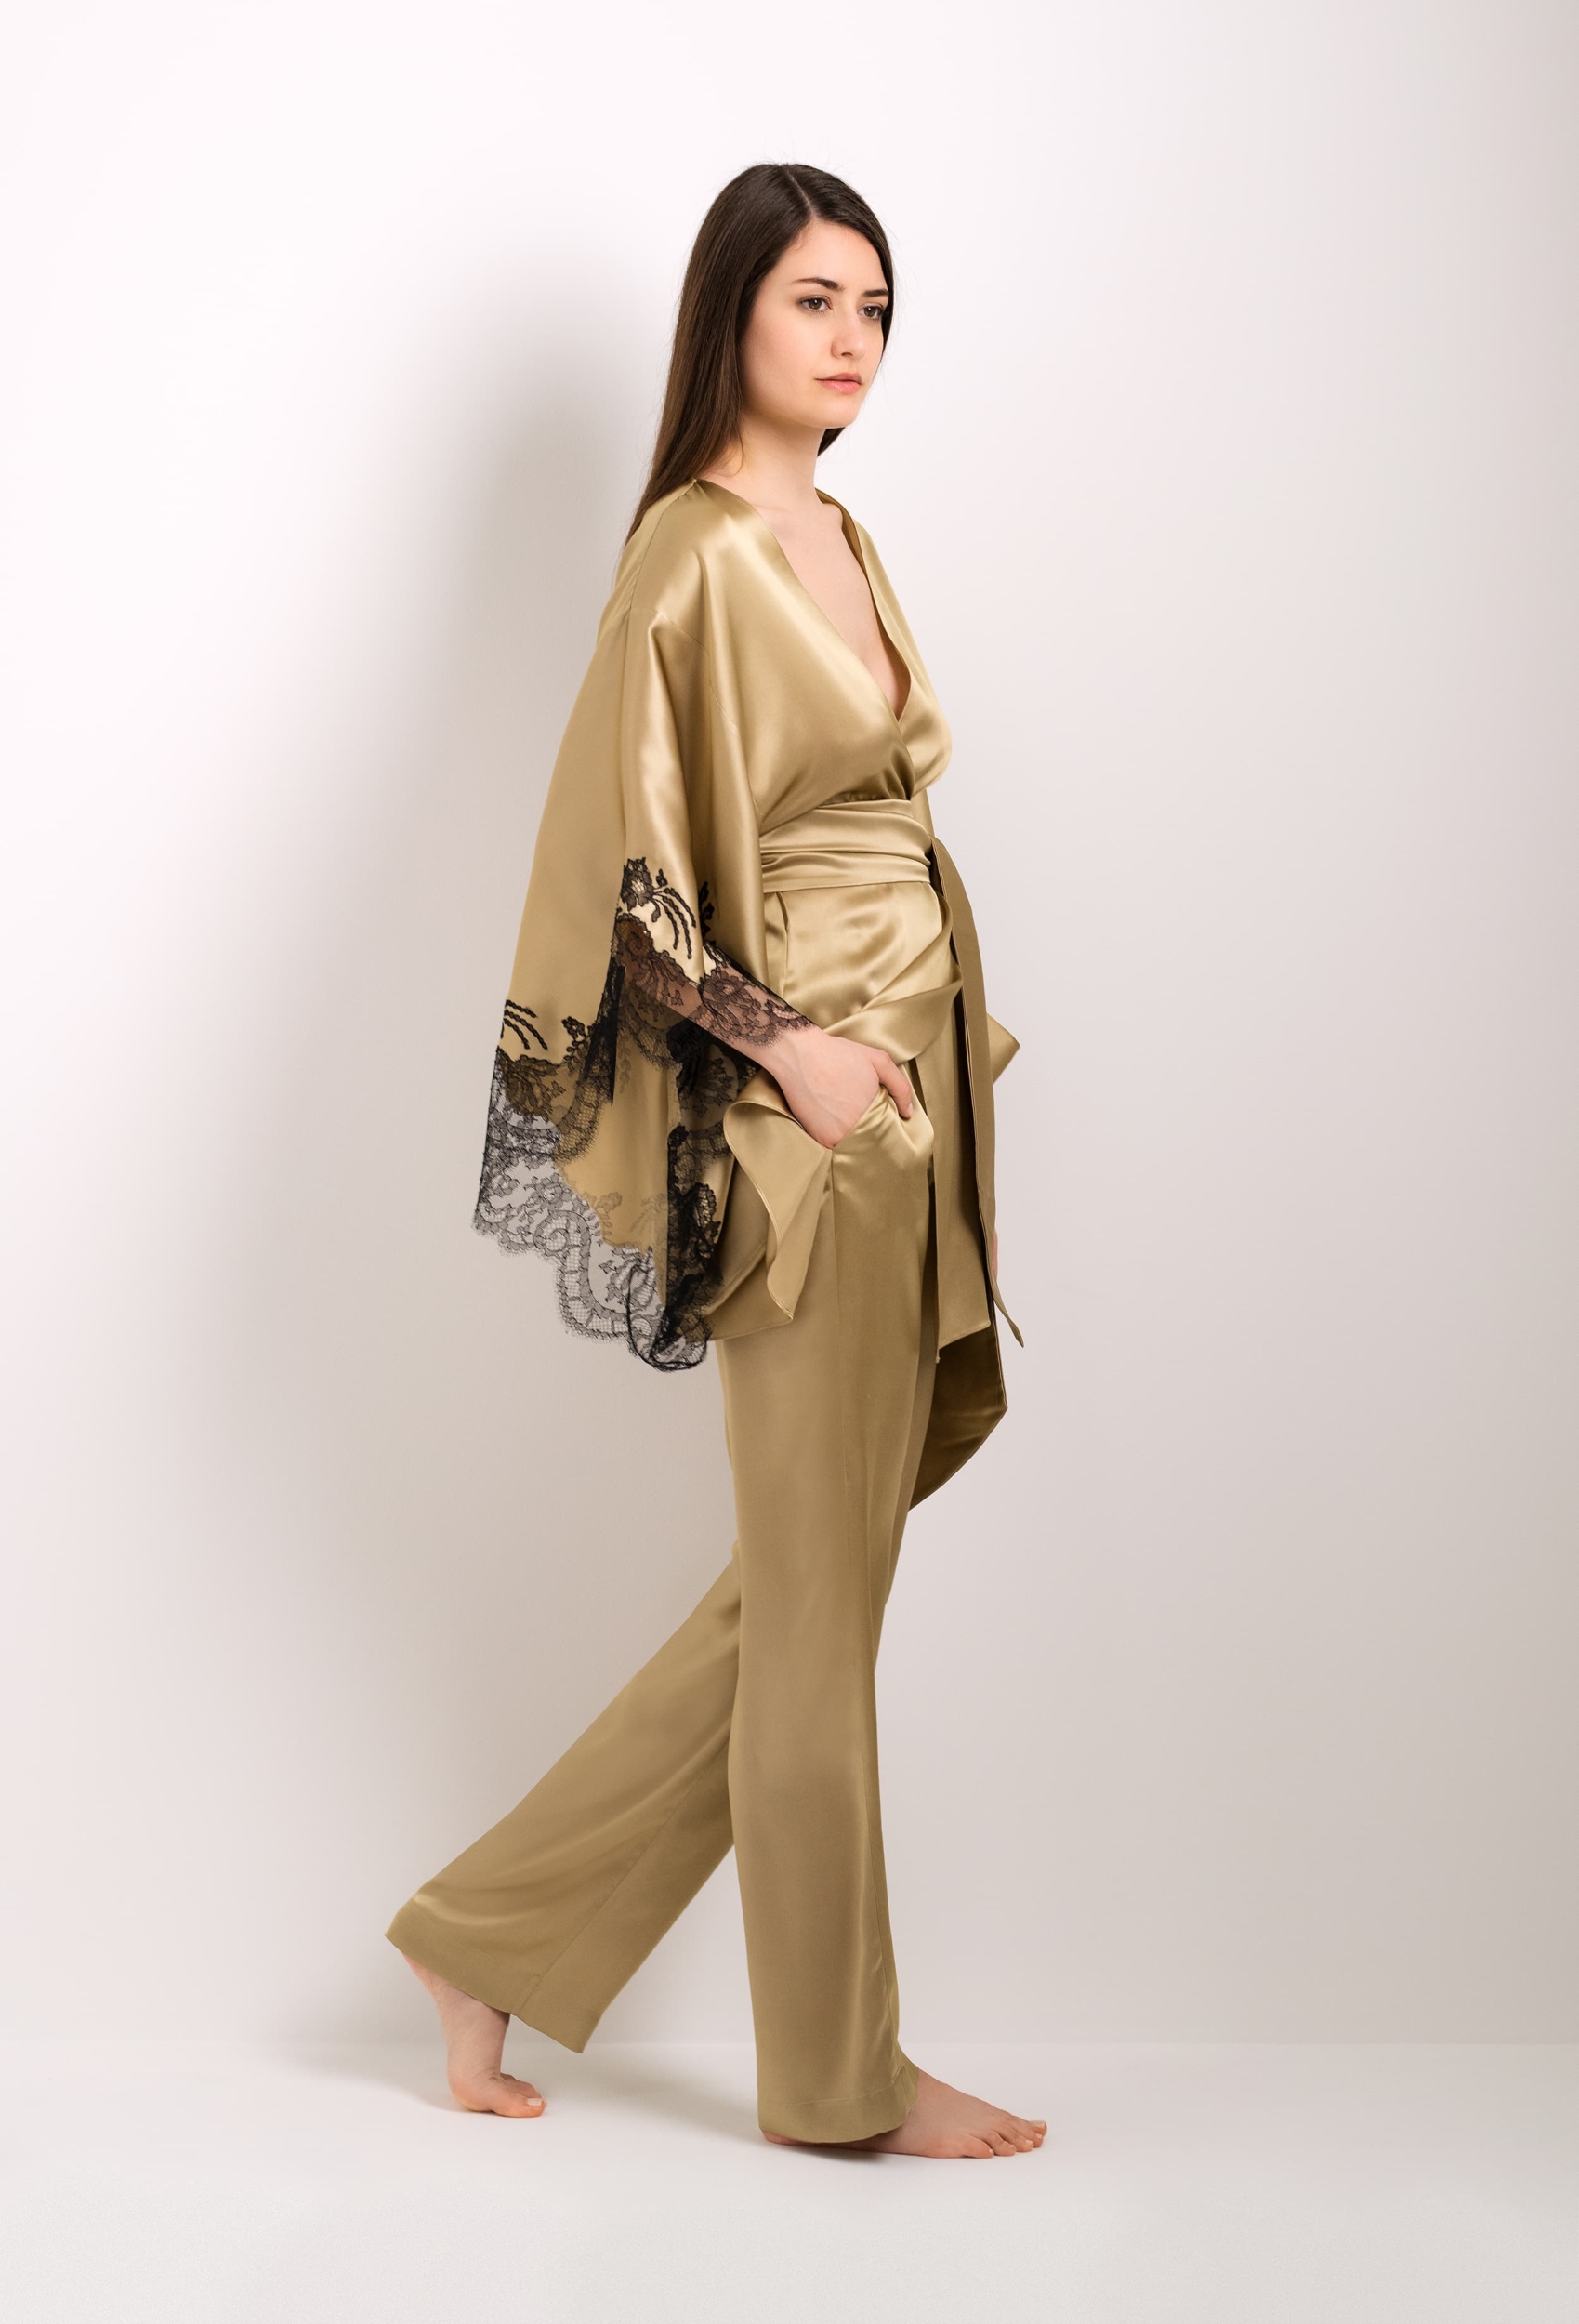 - Caudry Venise Carine Gilson silk Short kimono black - and gold lace